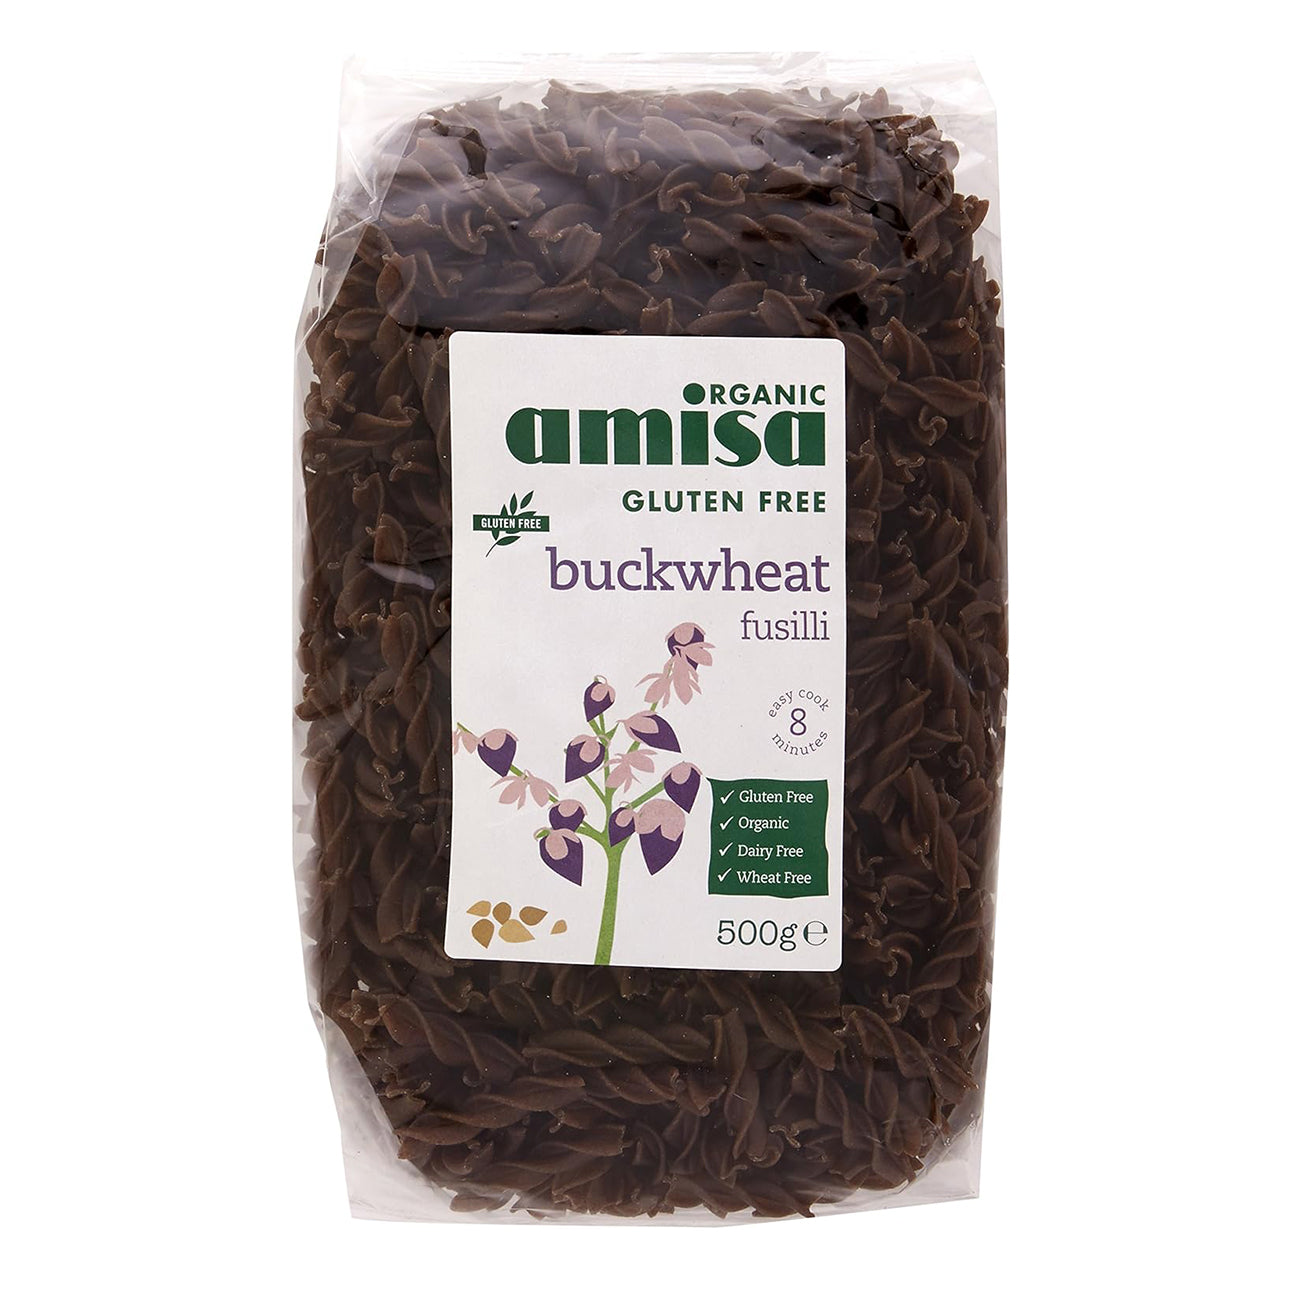 Organic Gluten Free Buckwheat Fusilli 500g